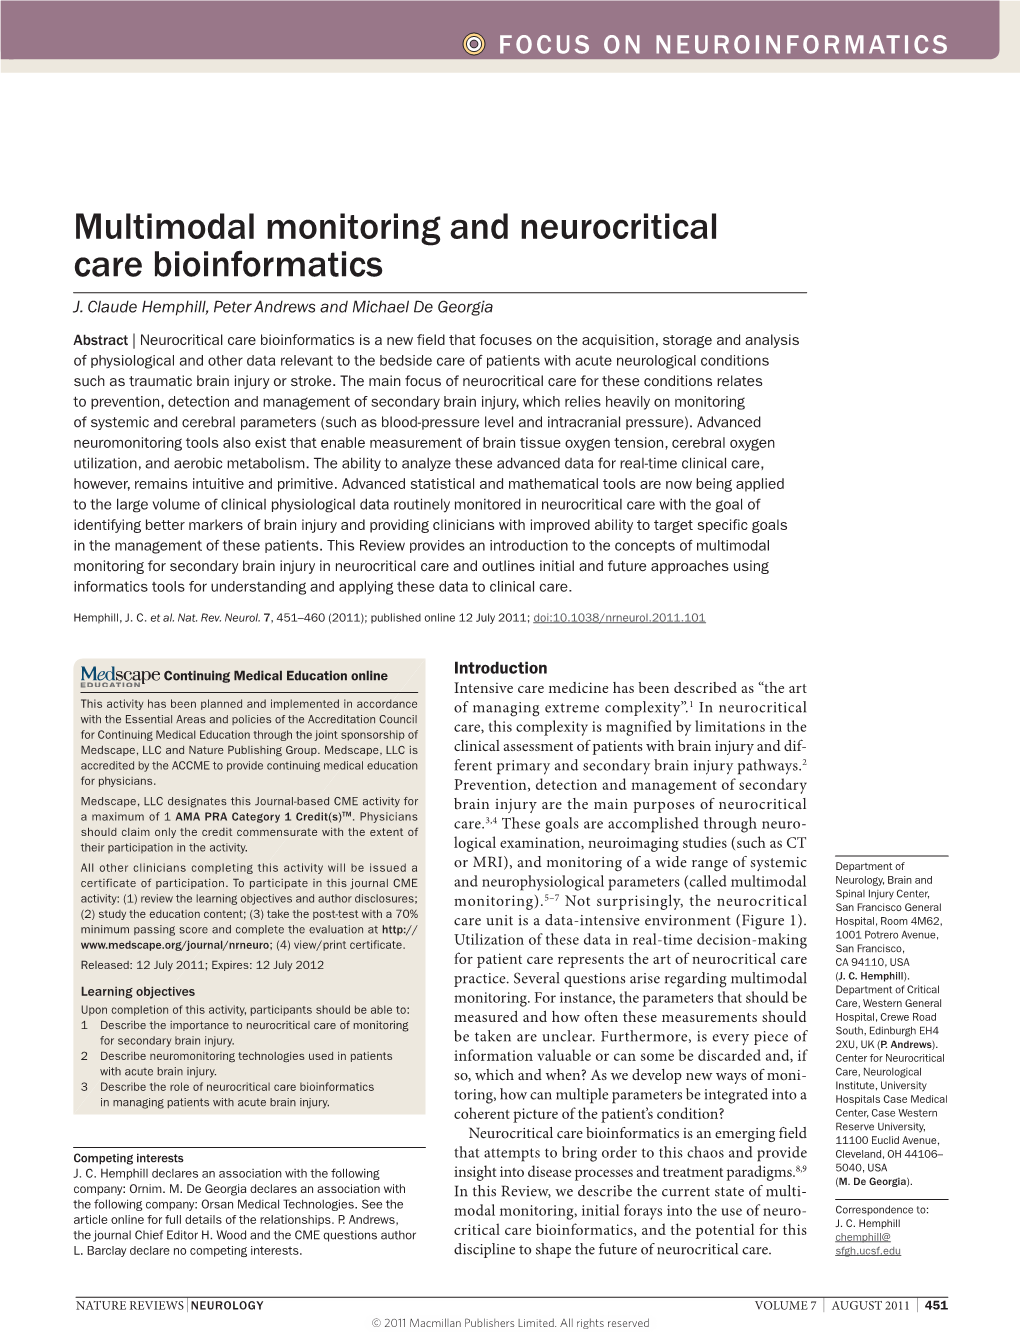 Multimodal Monitoring and Neurocritical Care Bioinformatics J